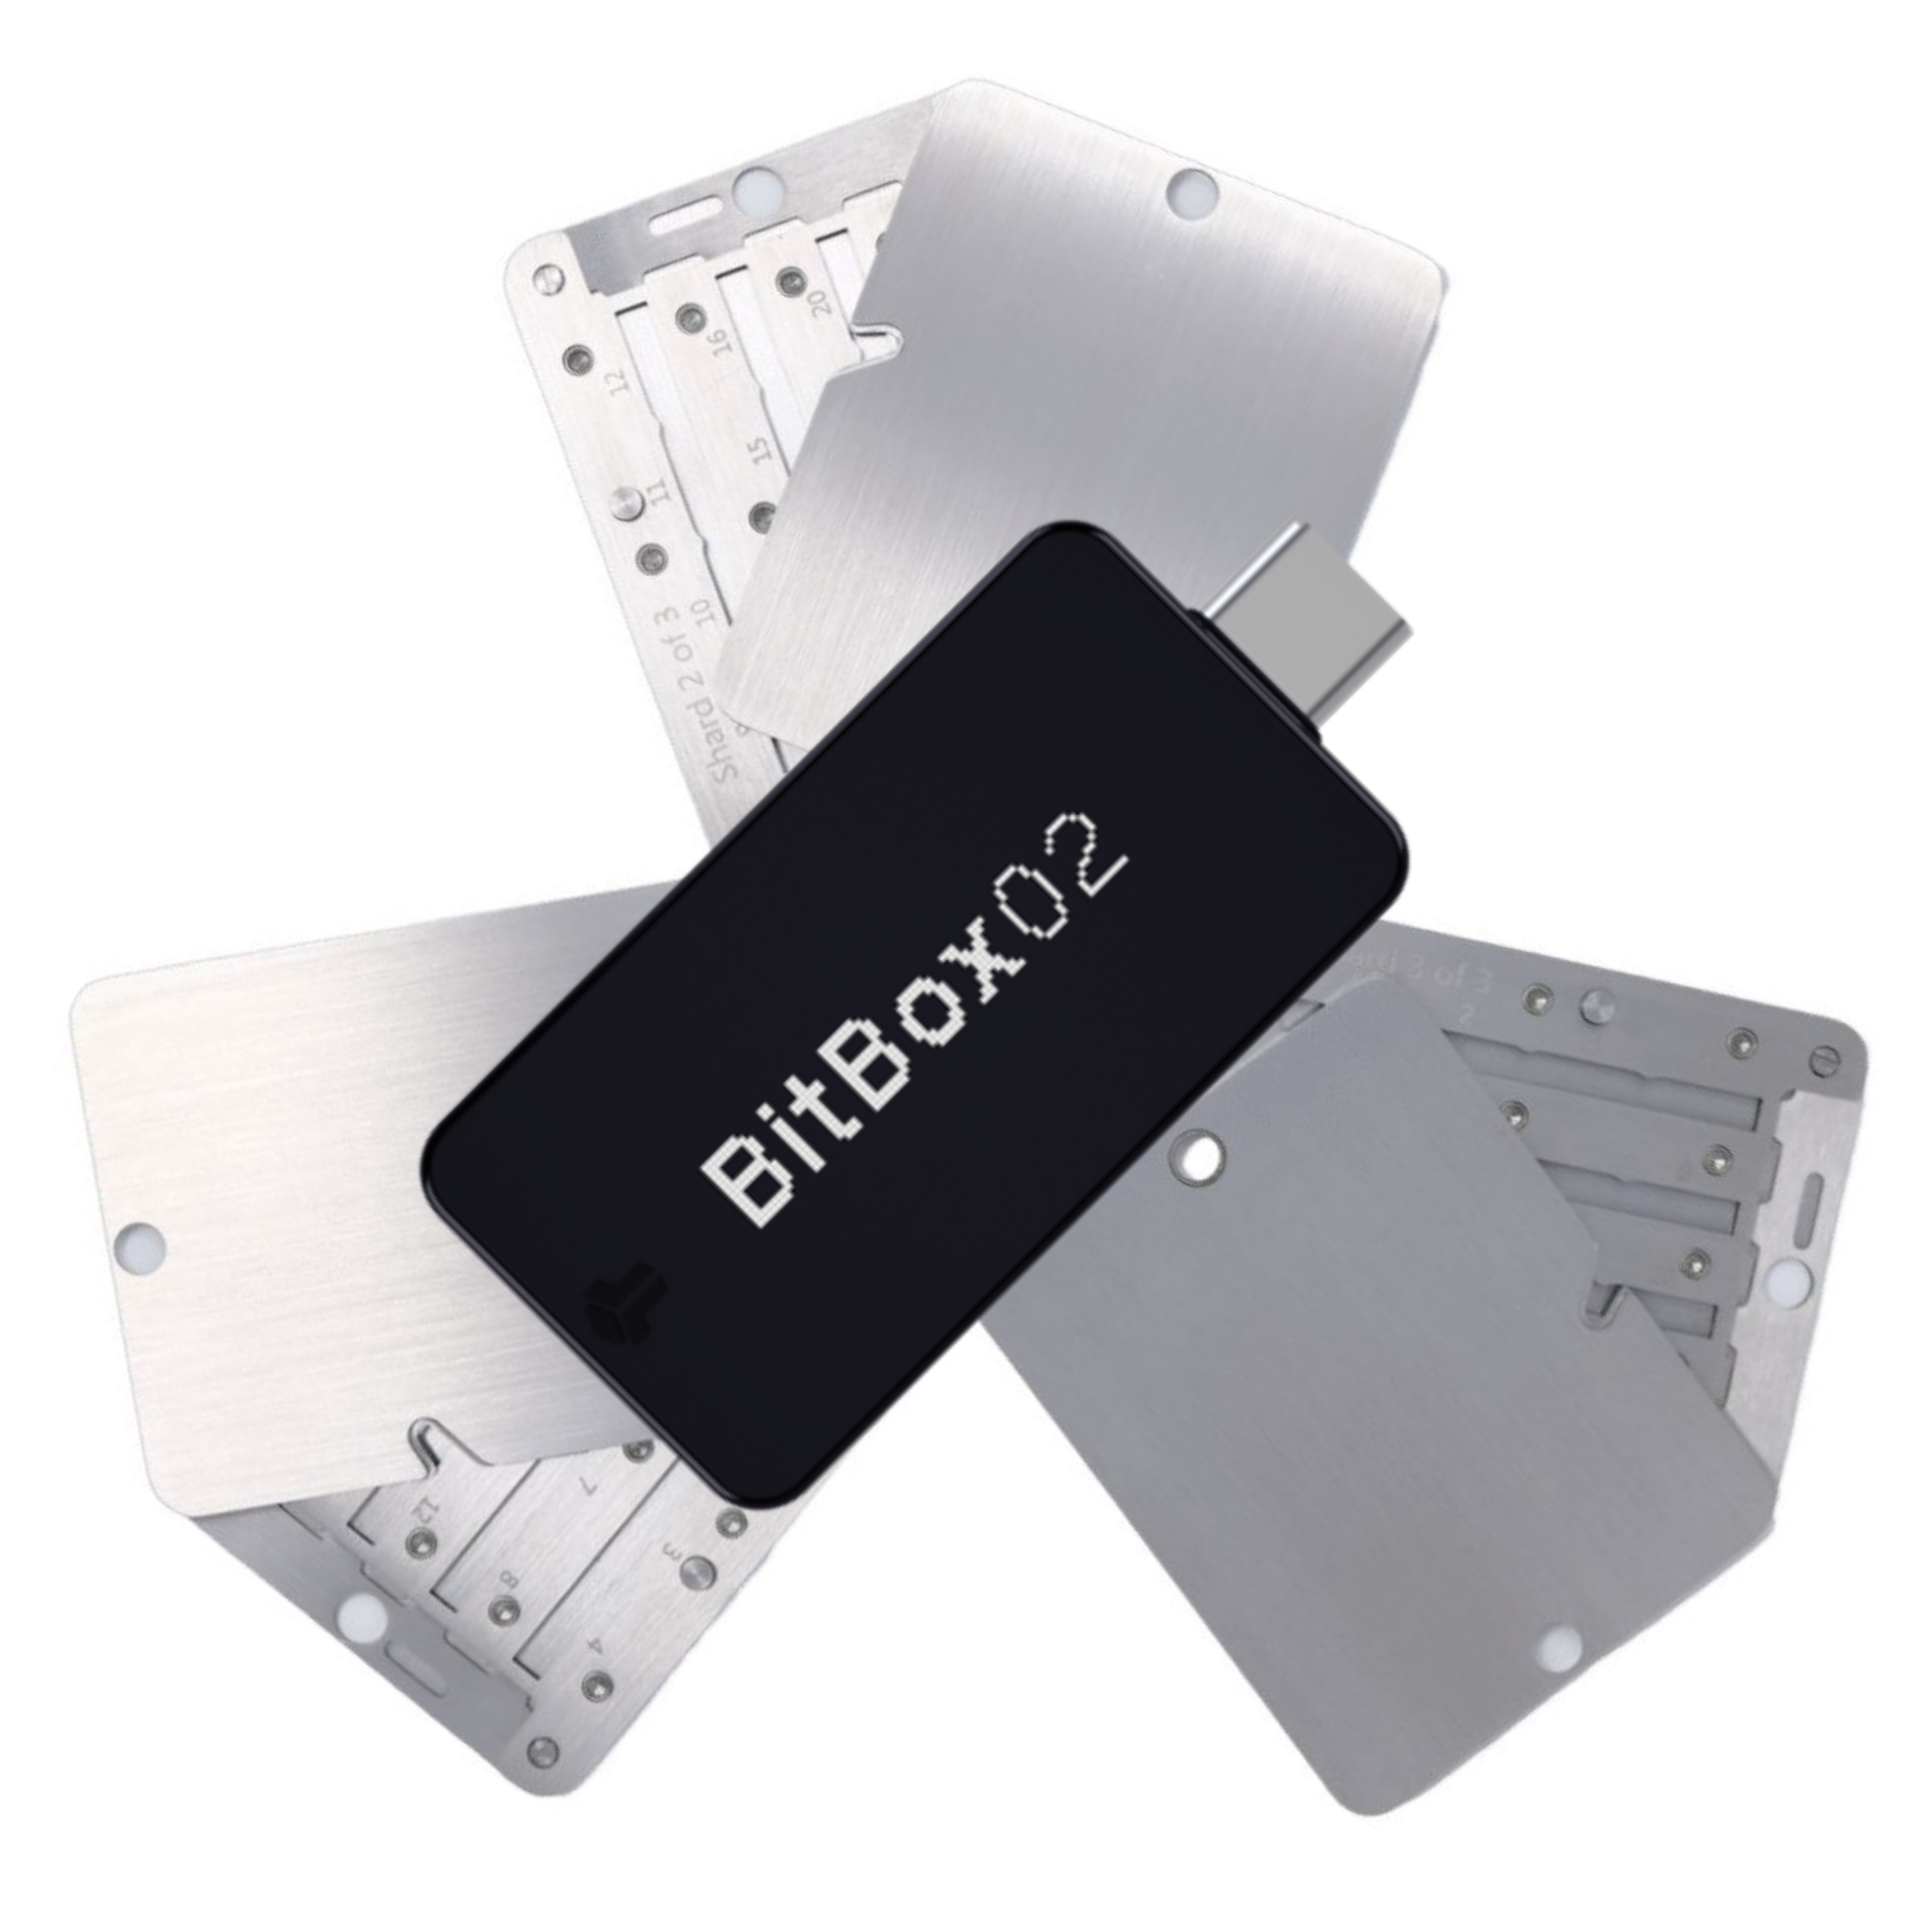 BitBox02 Multi Edition and Multishard